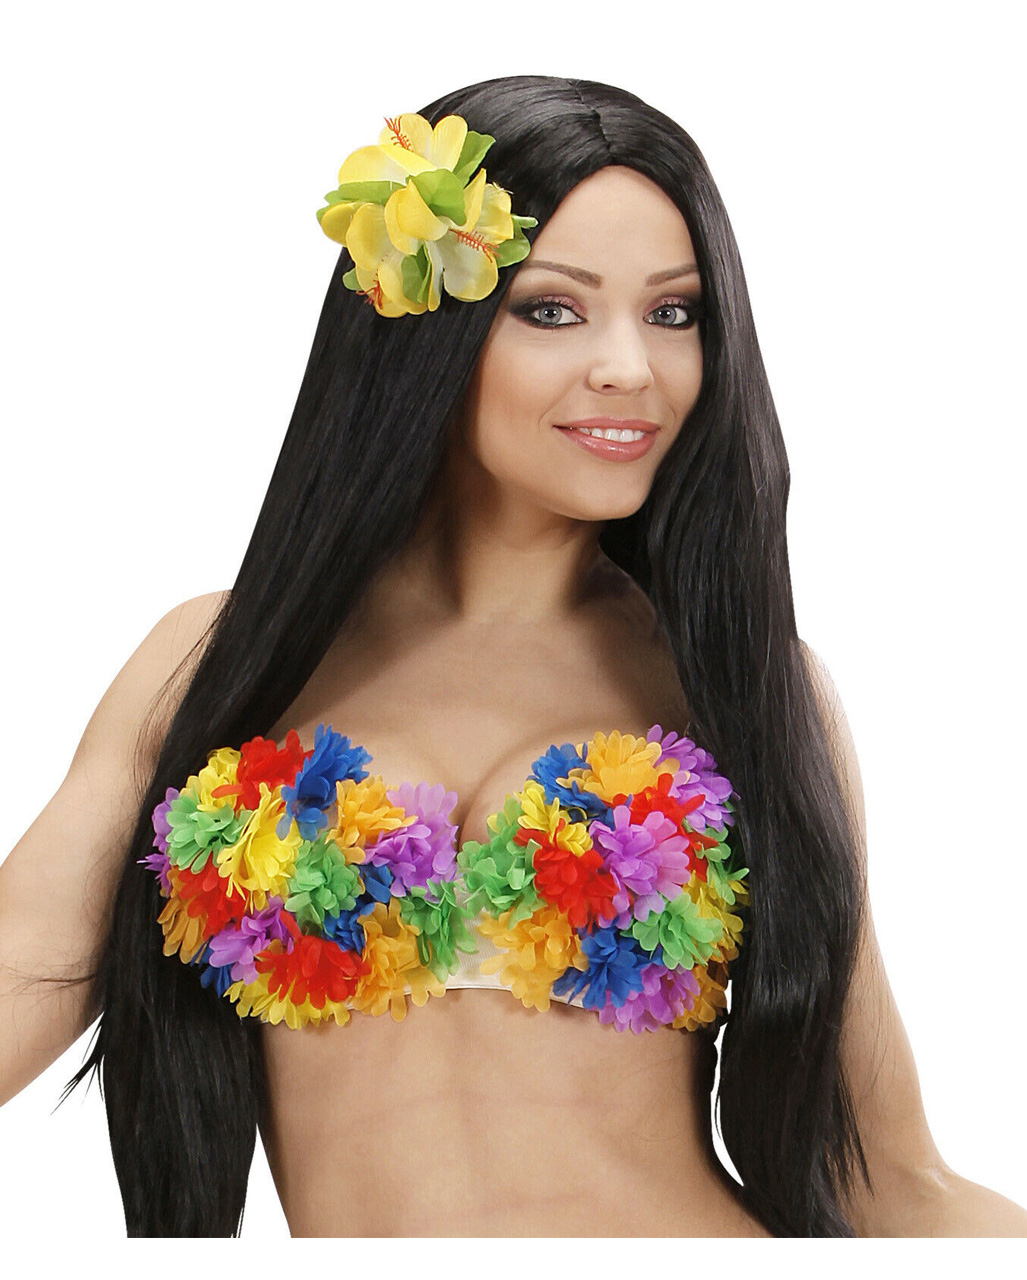 https://inst-0.cdn.shockers.de/ku_cdn/out/pictures/master/product/1/bunter_hawaii_bh-blumen_bikini-beach_party_kostume-mootparty_zubehoer-hawaii_bikini-8801730-01.jpg